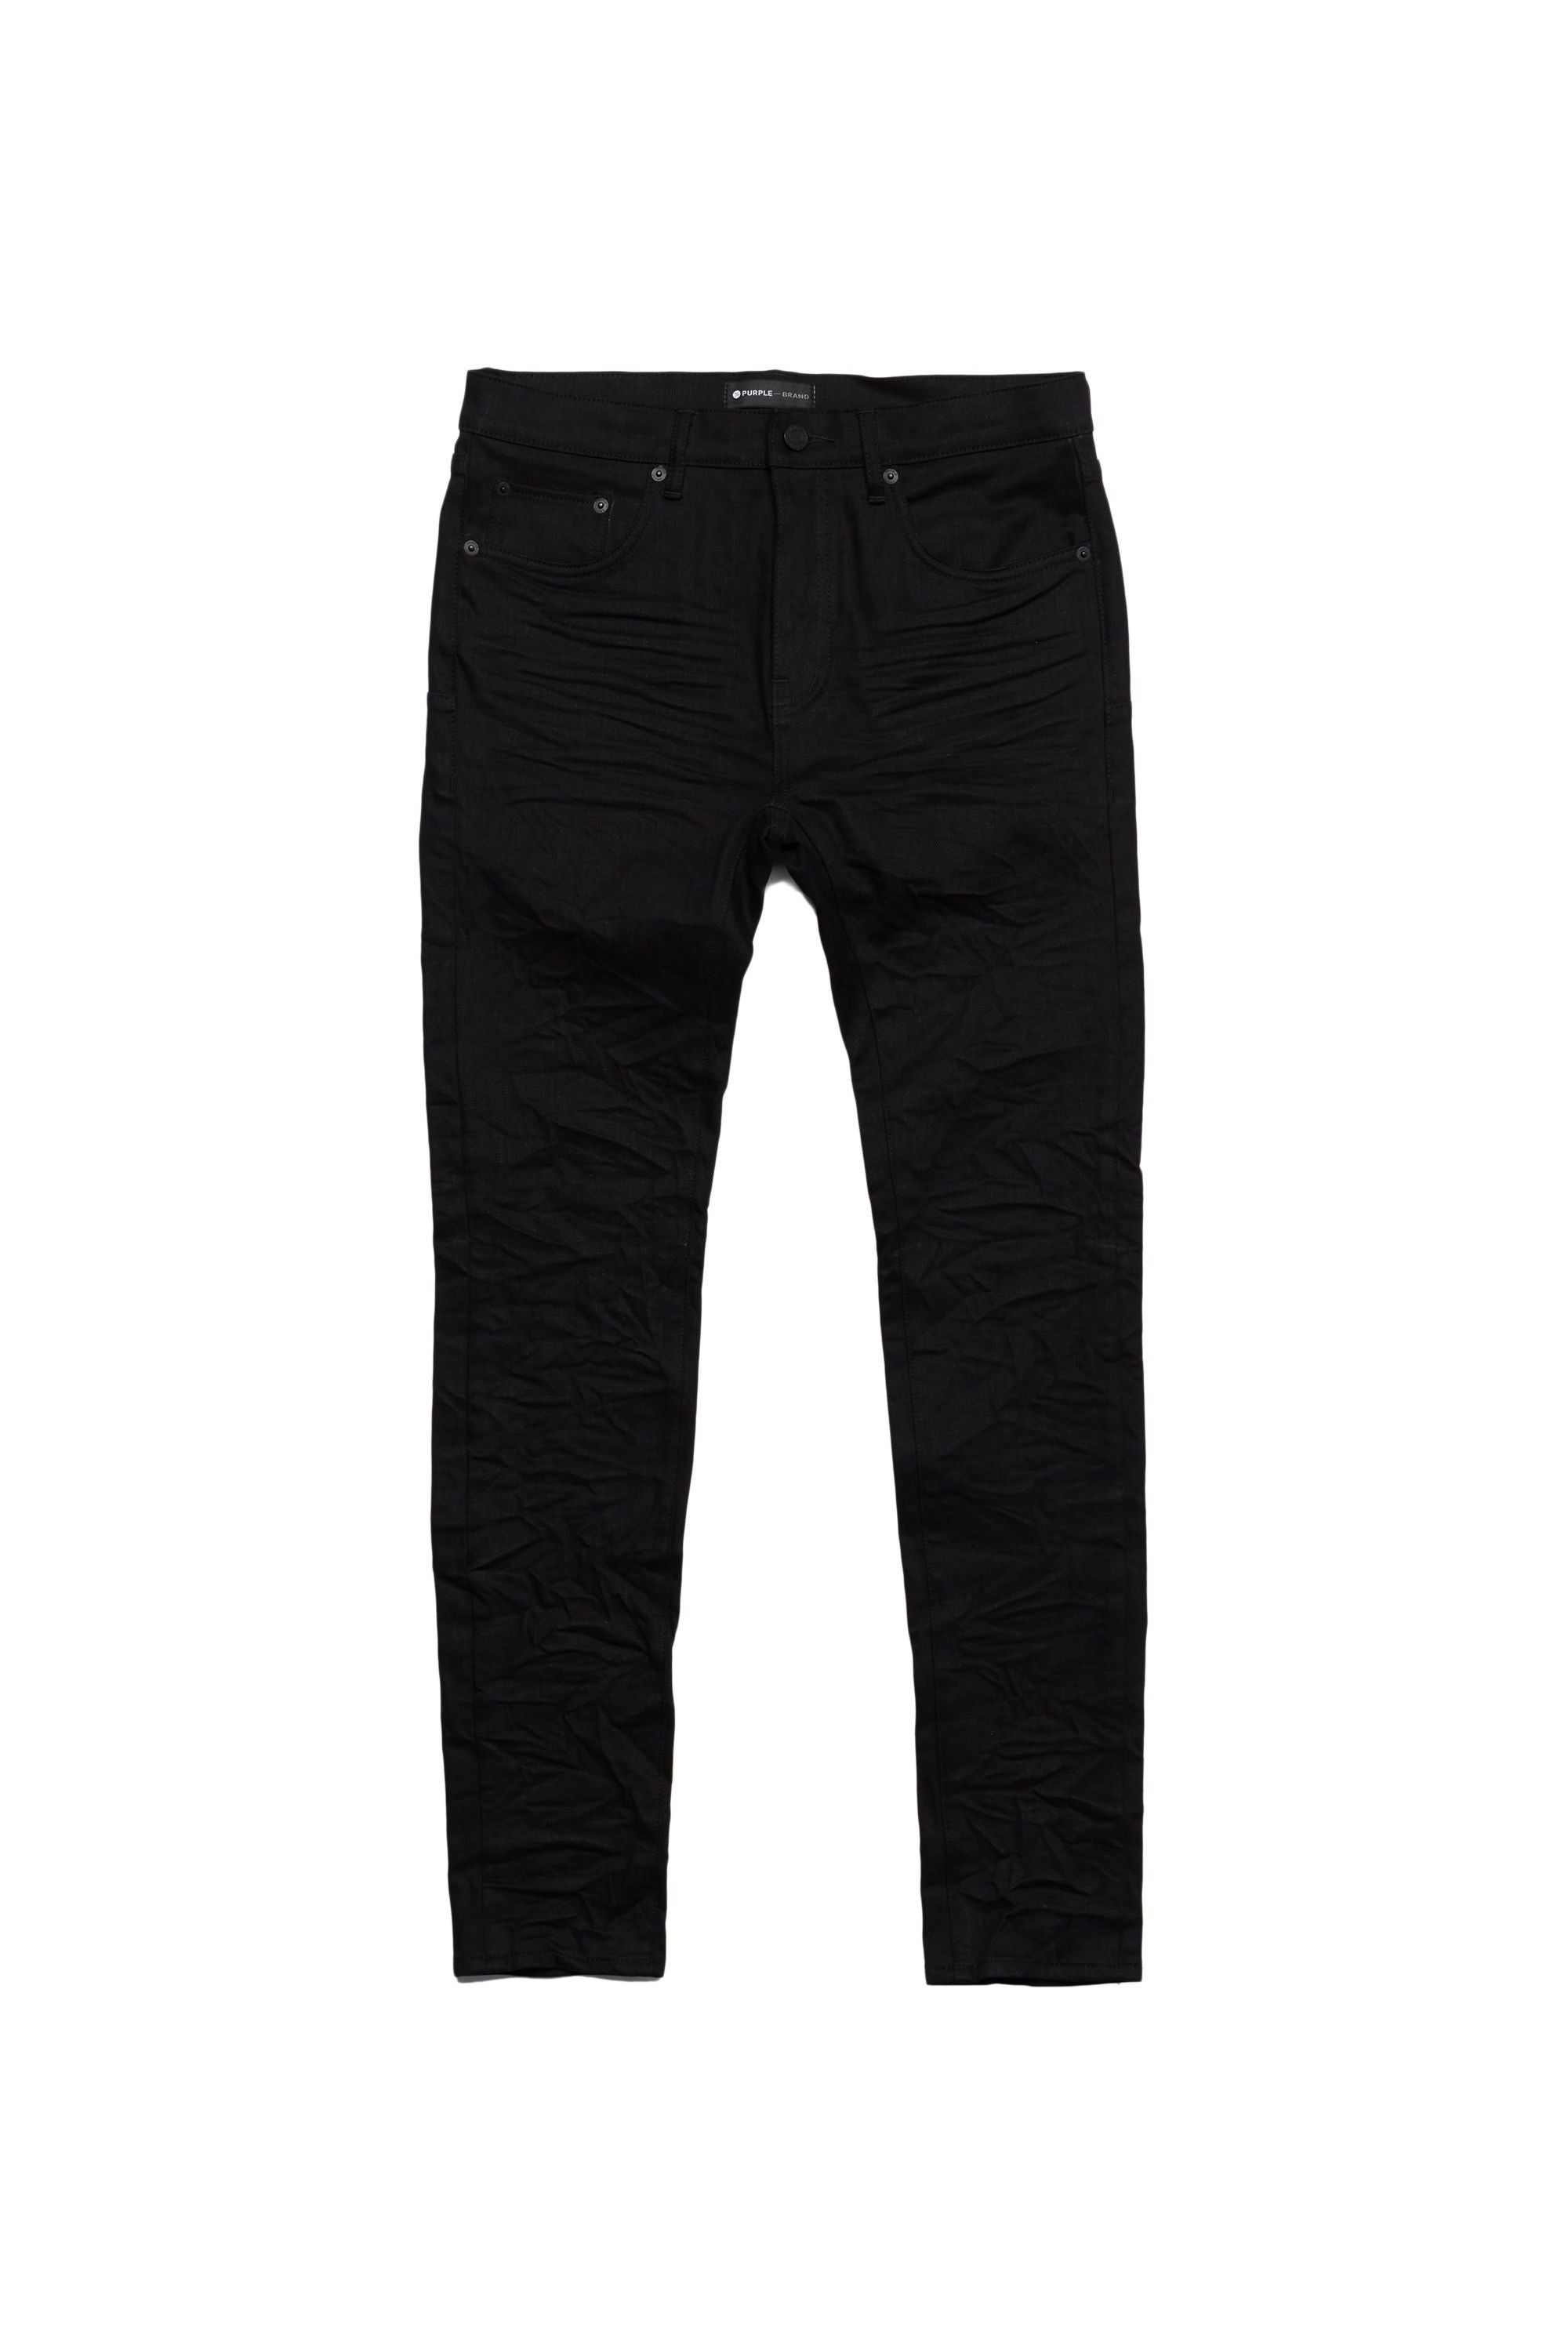 PURPLE BRAND: Jeans men - Black